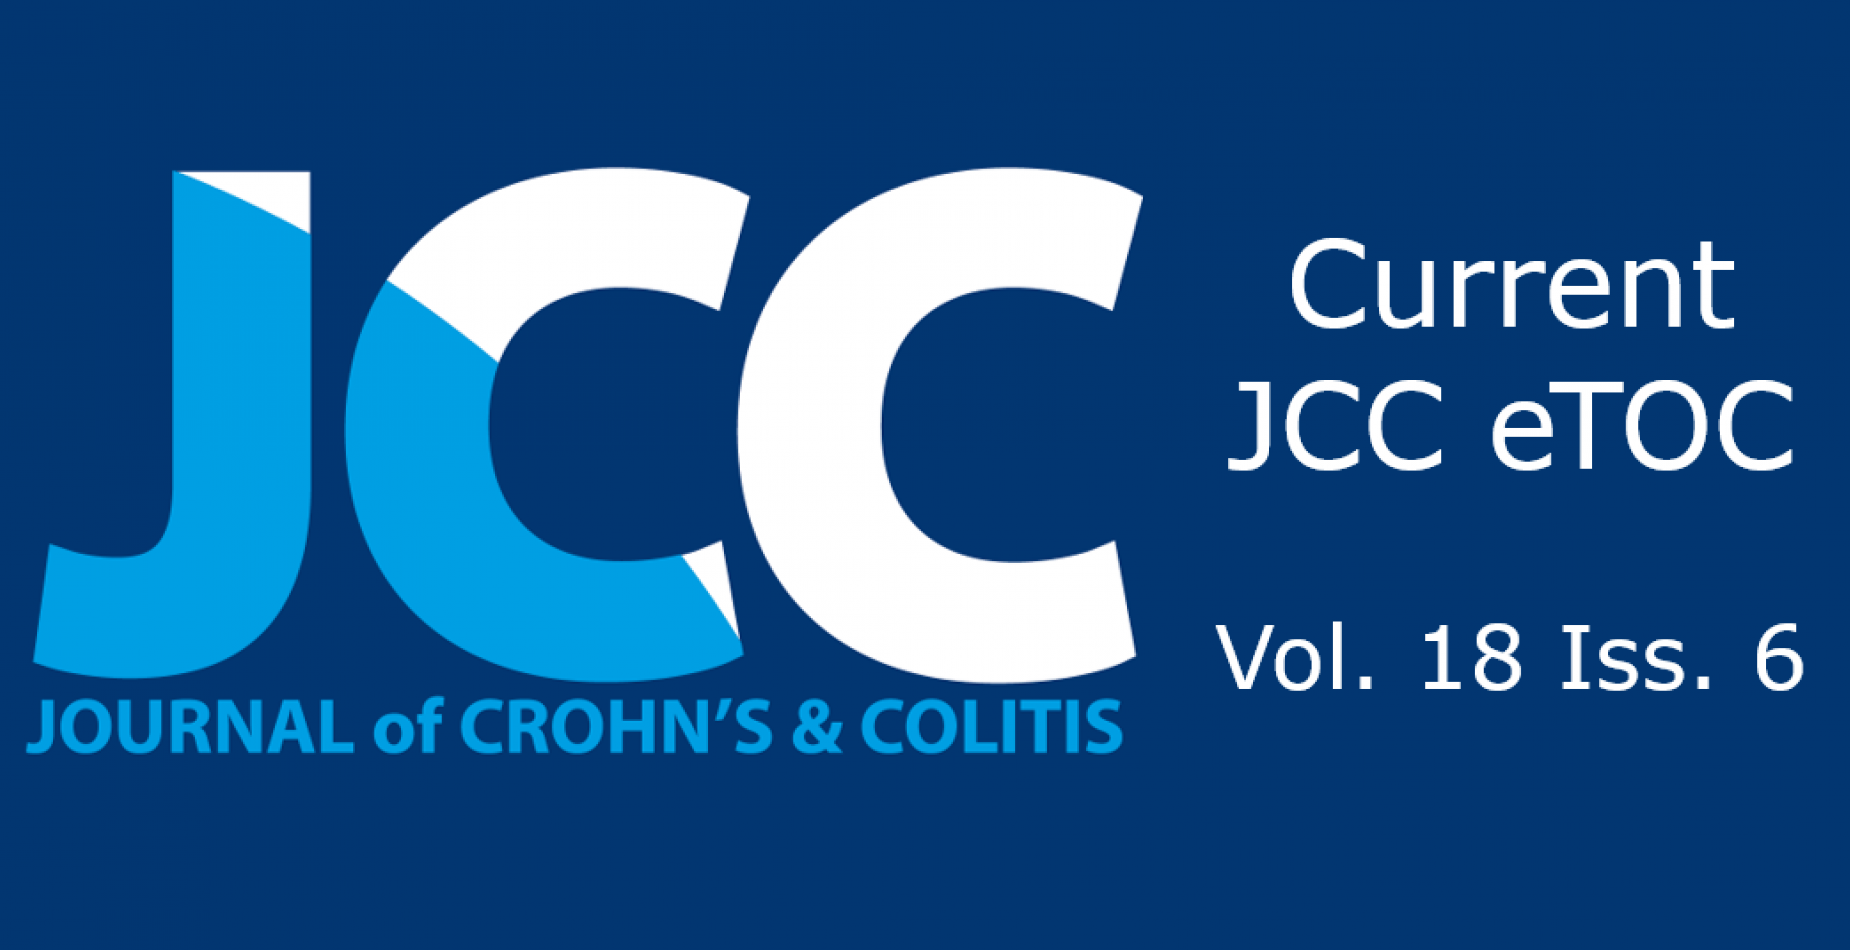 Current JCC eTOC Vol. 18 Iss. 6